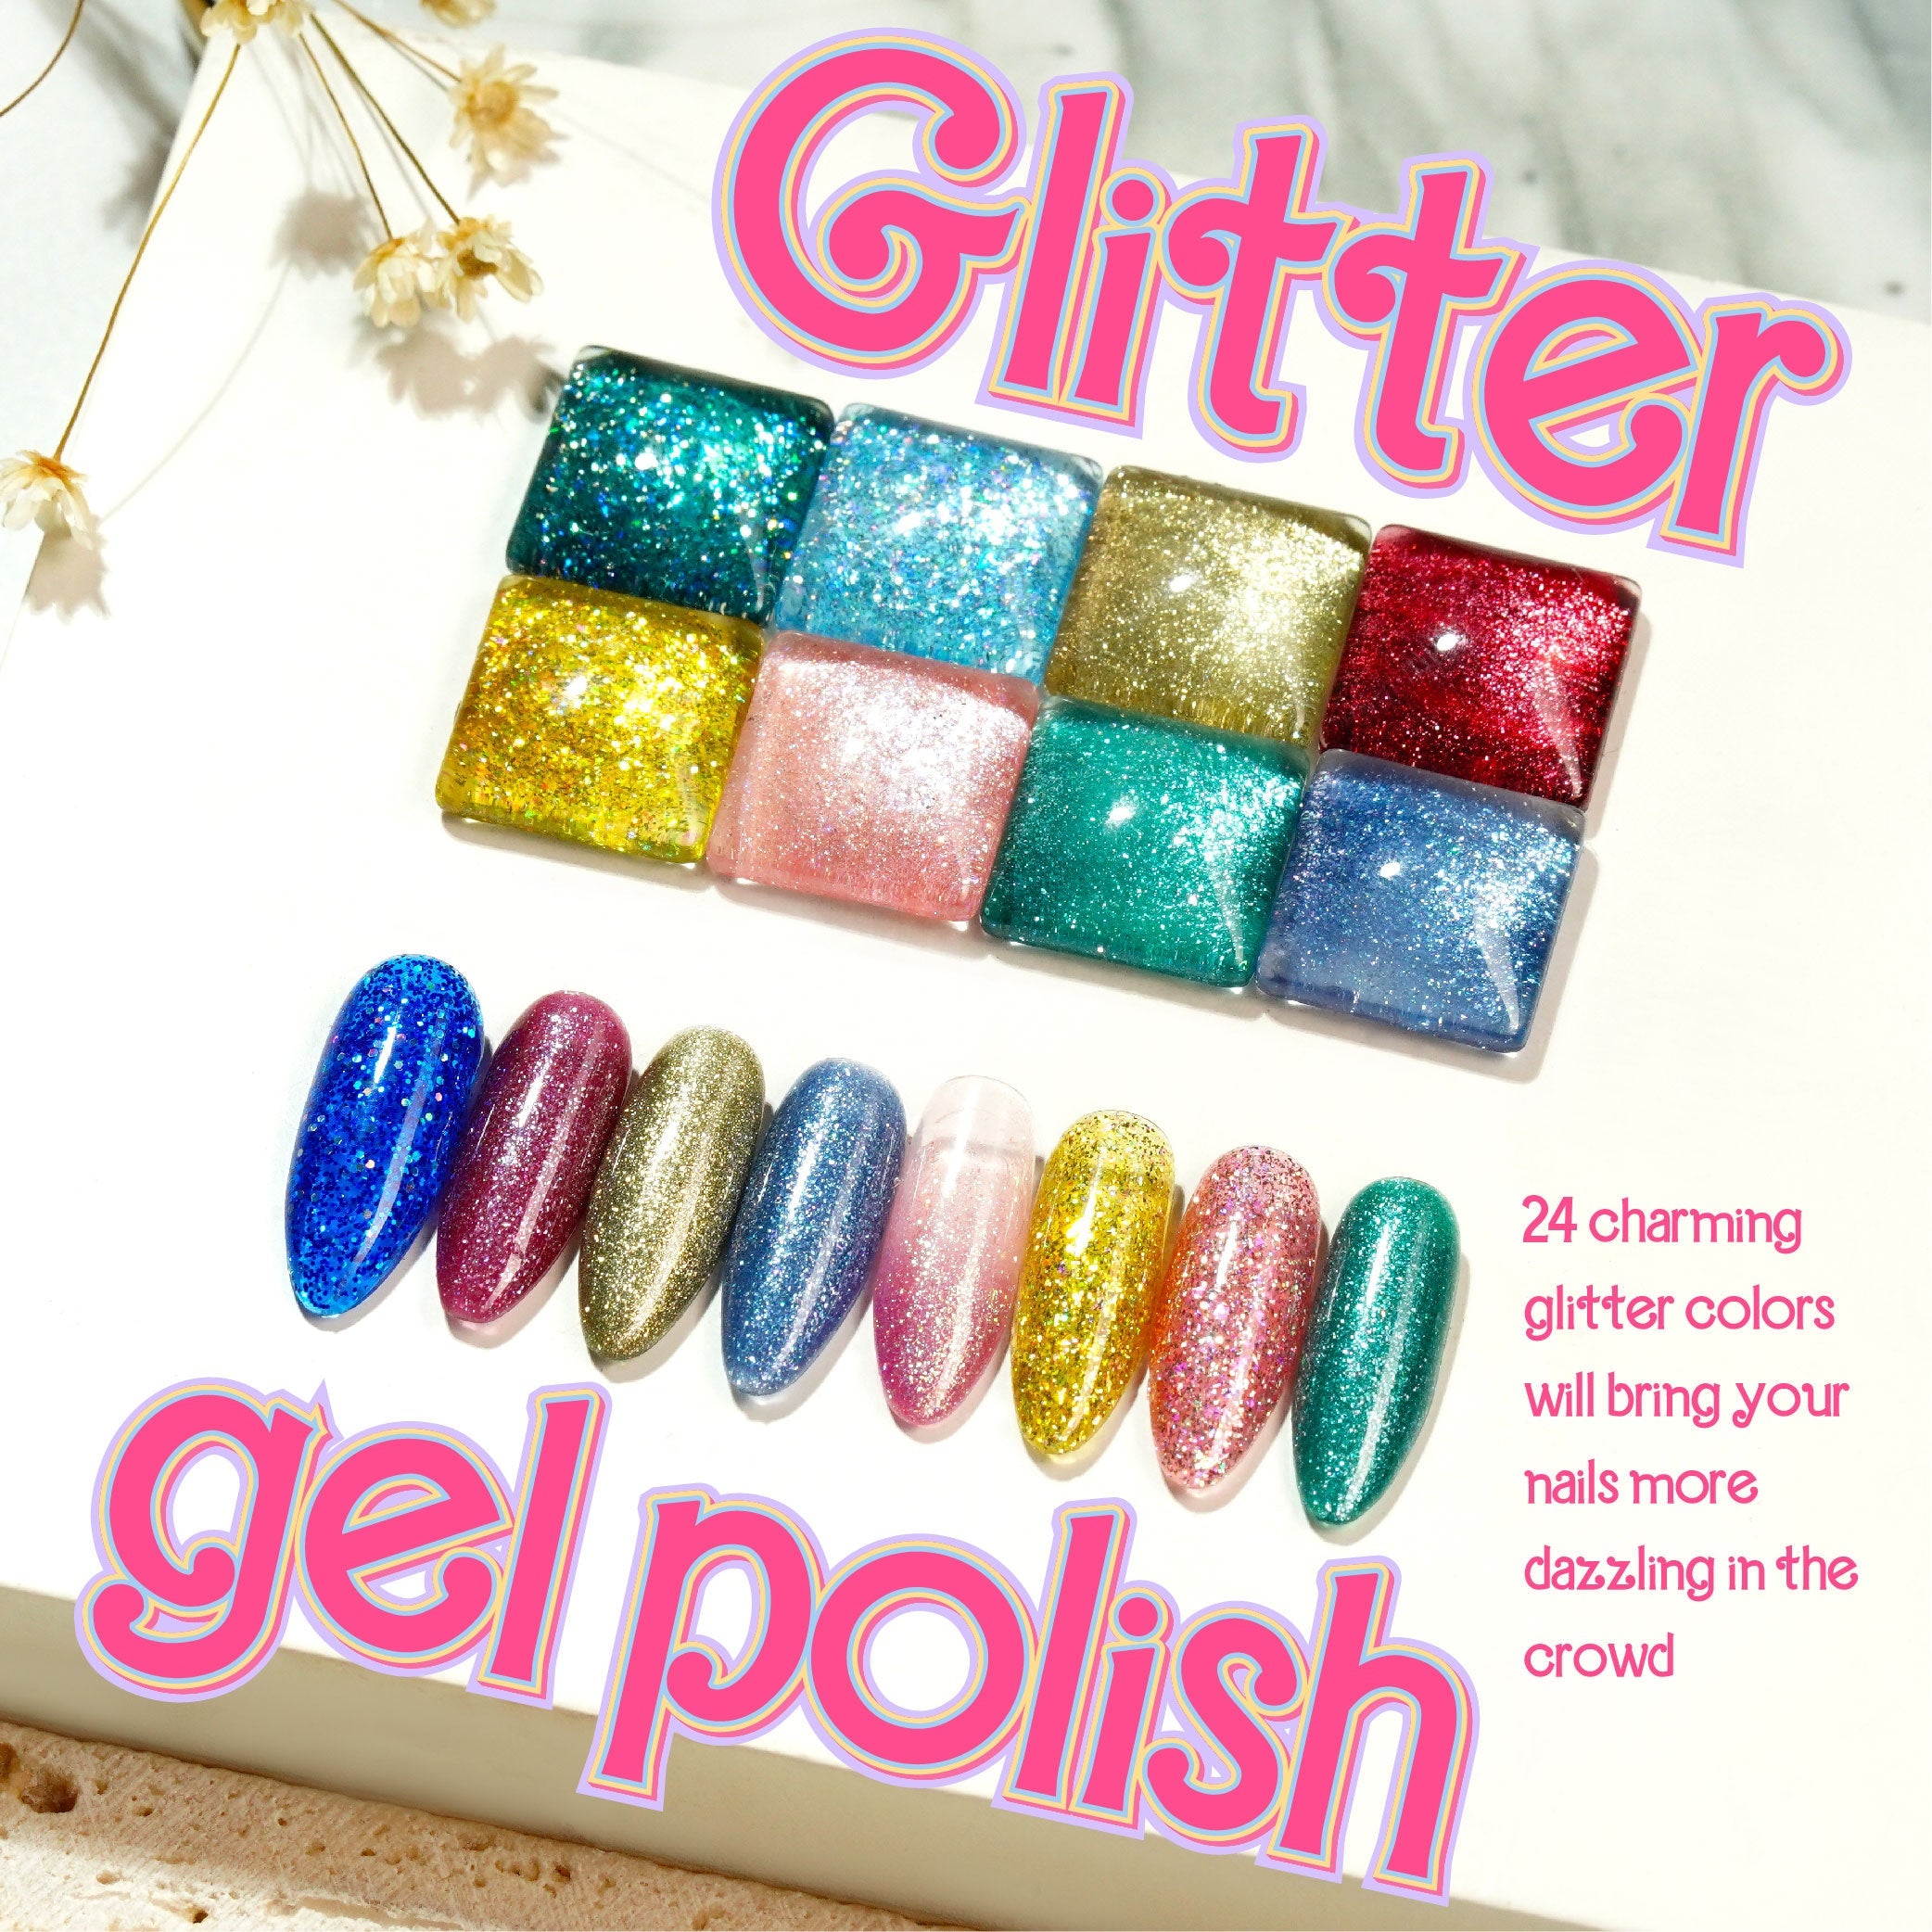 LAVIS Glitter G03 - 17 - Gel Polish 0.5 oz - Barbie Collection